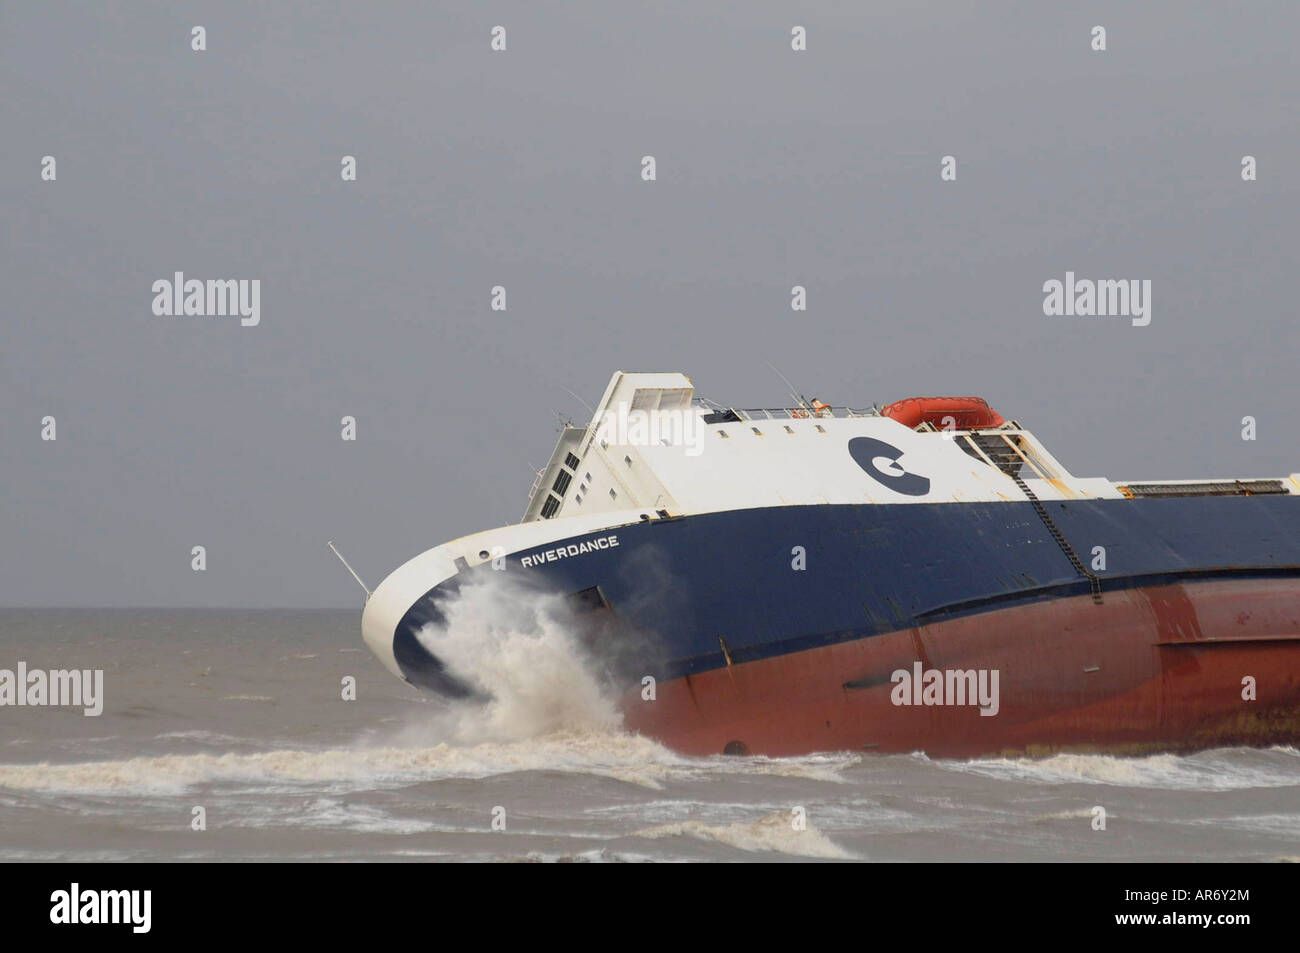 waves hitting beached ferry Riverdance Stock Photo